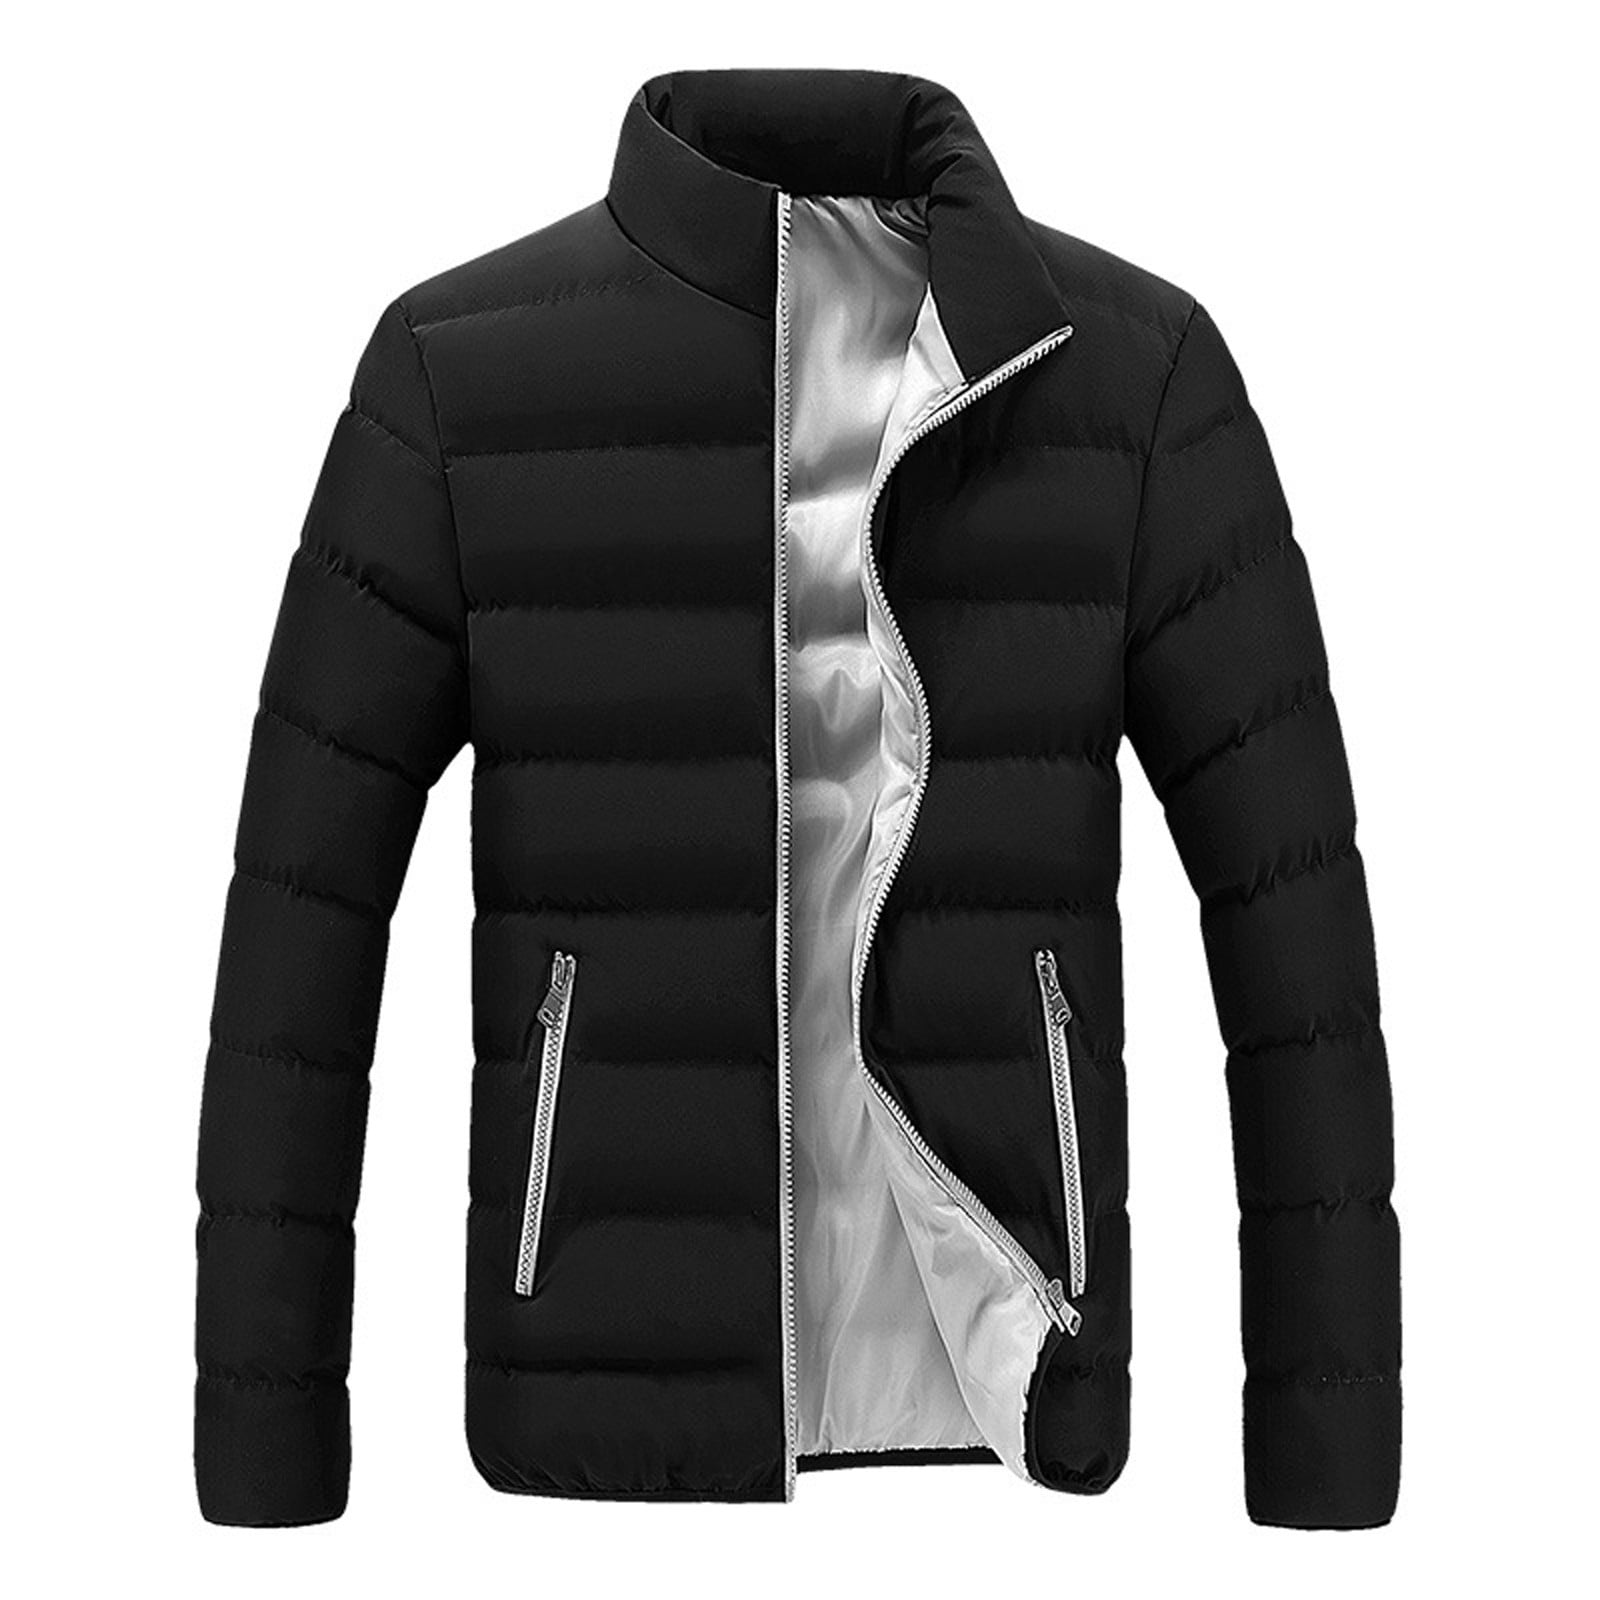 TIHLMK Down Jacket Deals Clearance Men's Winter Warm Slim Fit Packable ...